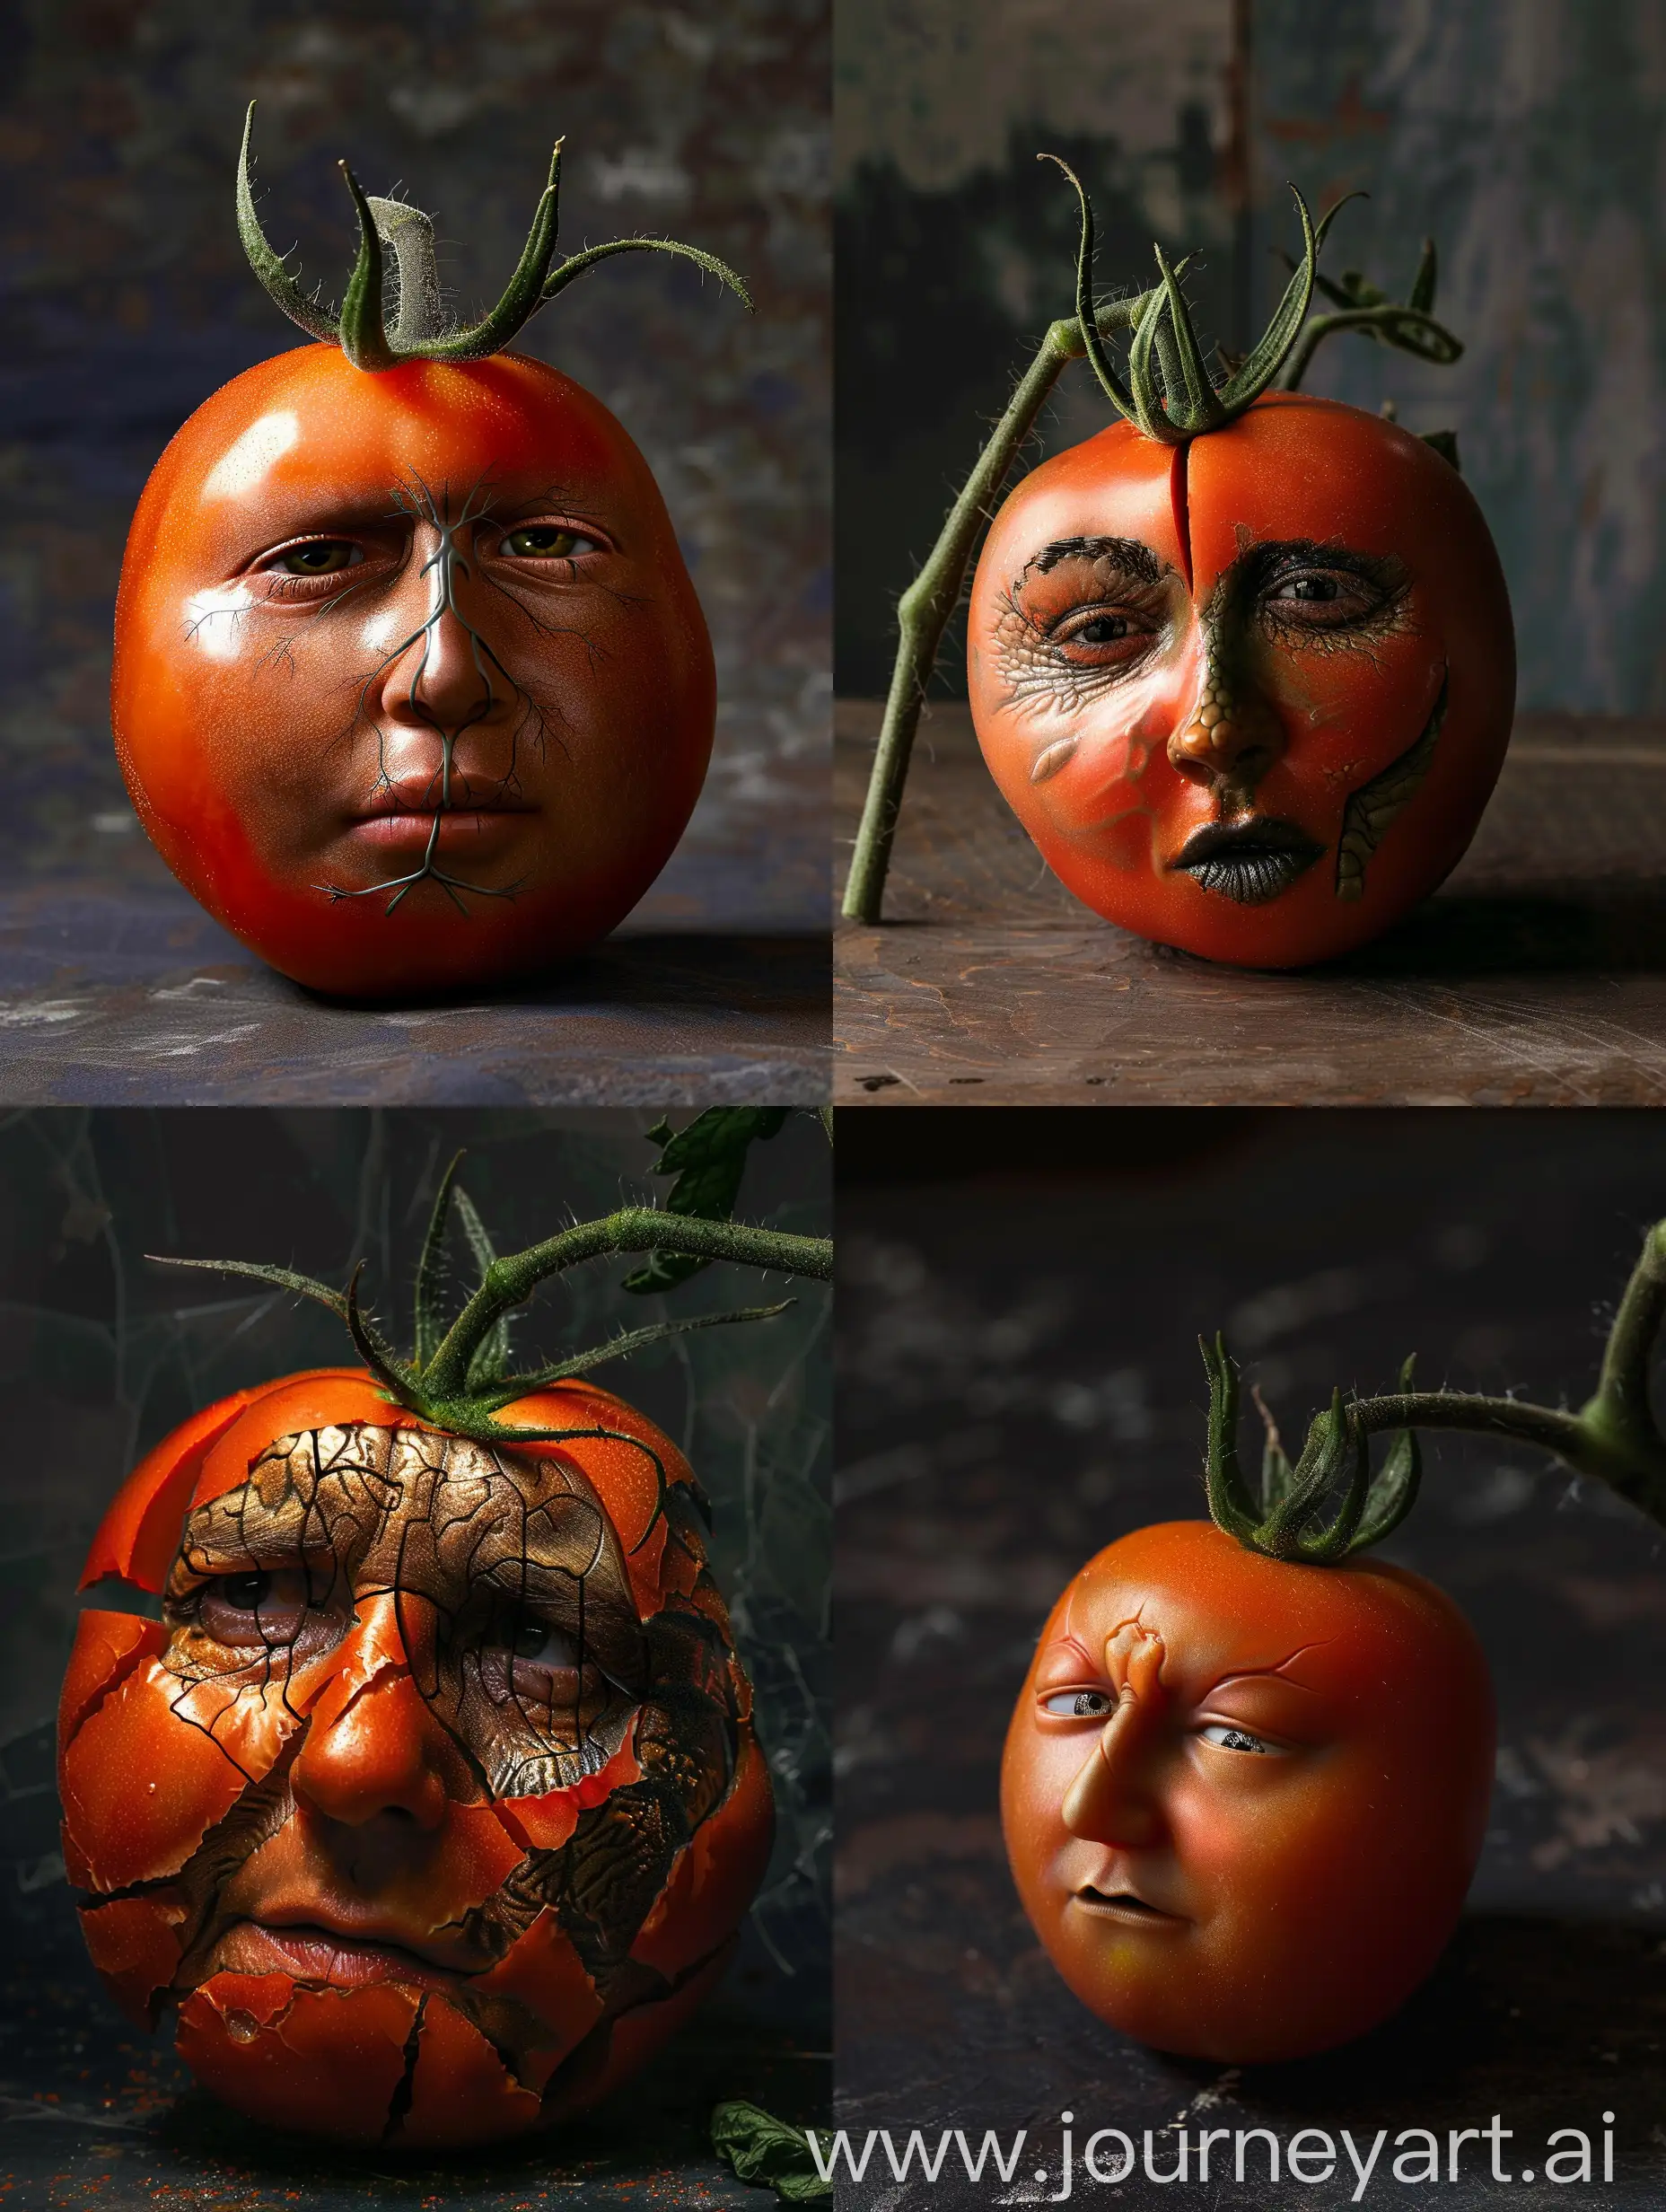 Dark-Fantasy-Tomato-with-Human-Face-Art-Vibrant-34-Aspect-Ratio